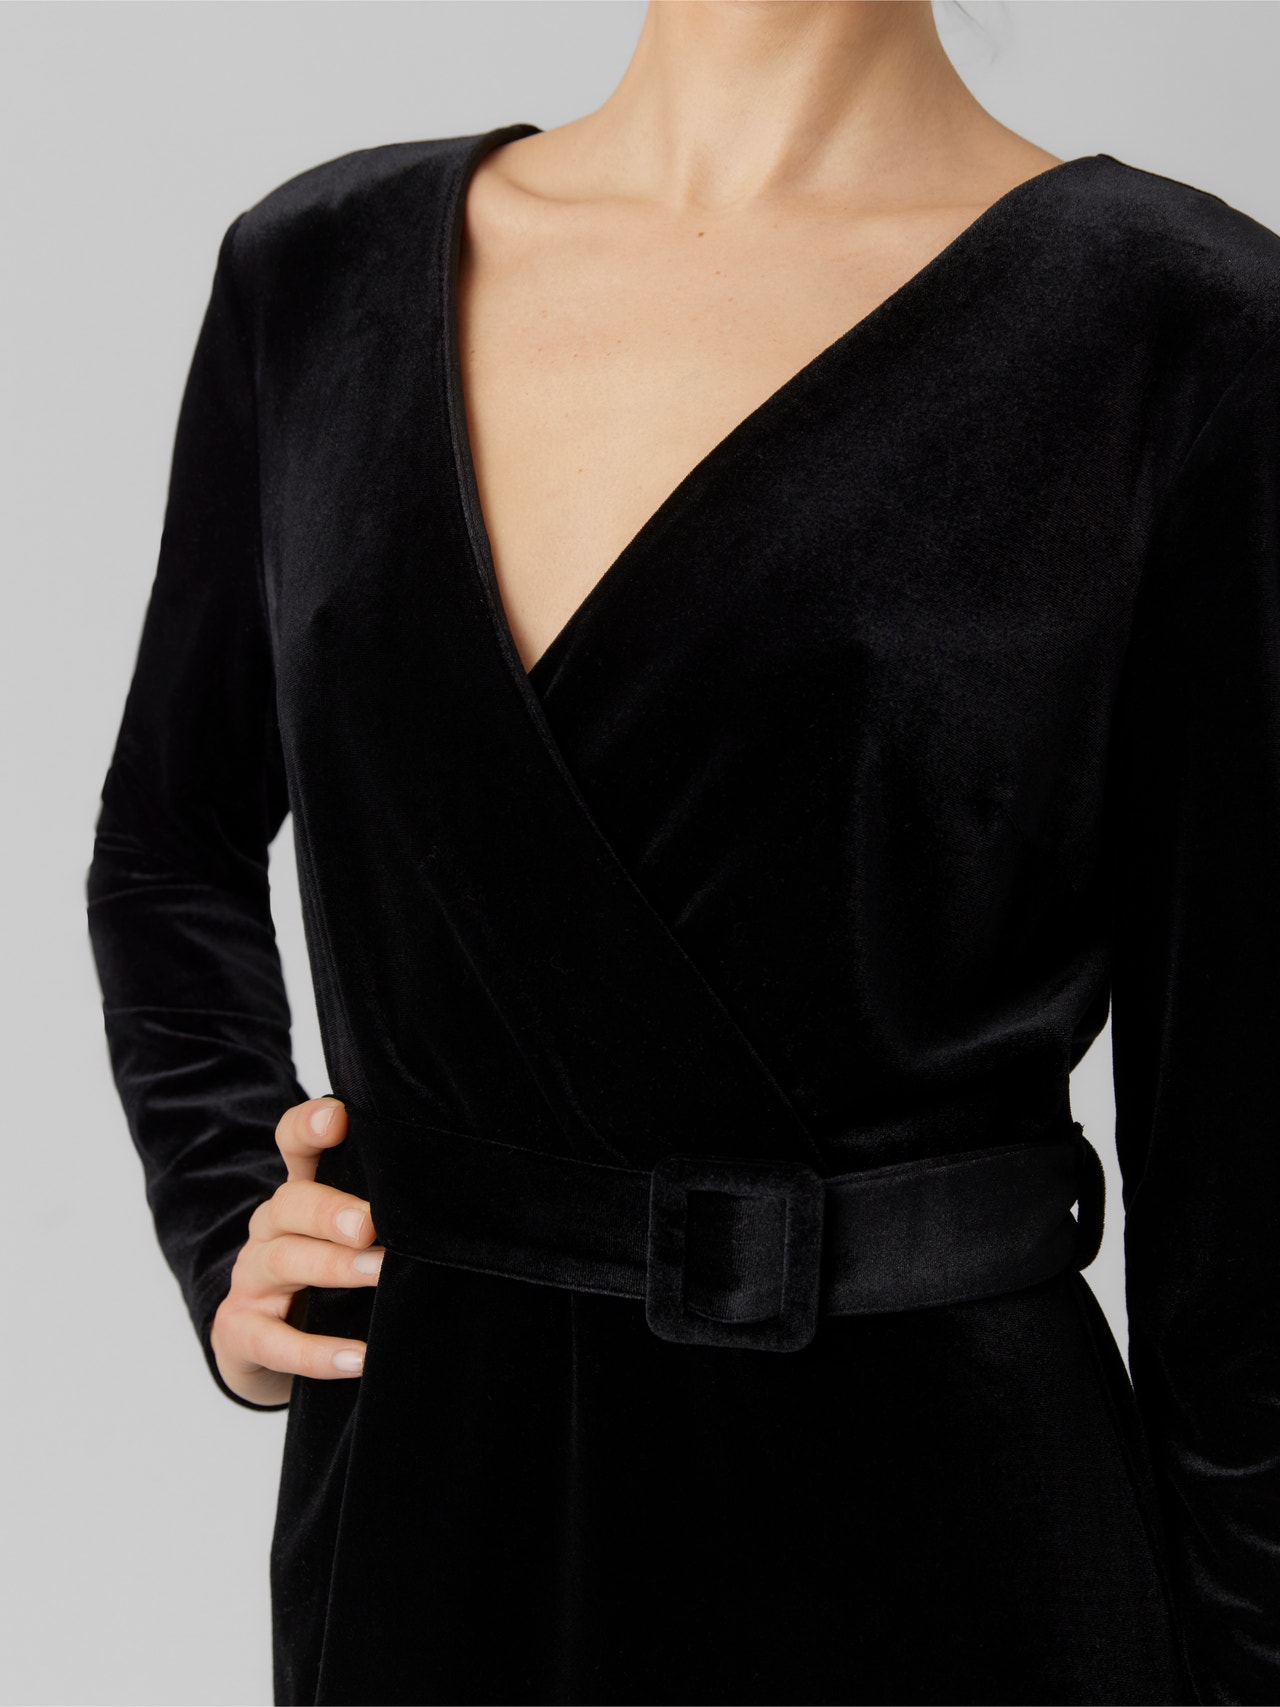 Vero Moda VMCARLY Long dress -Black - 10303359